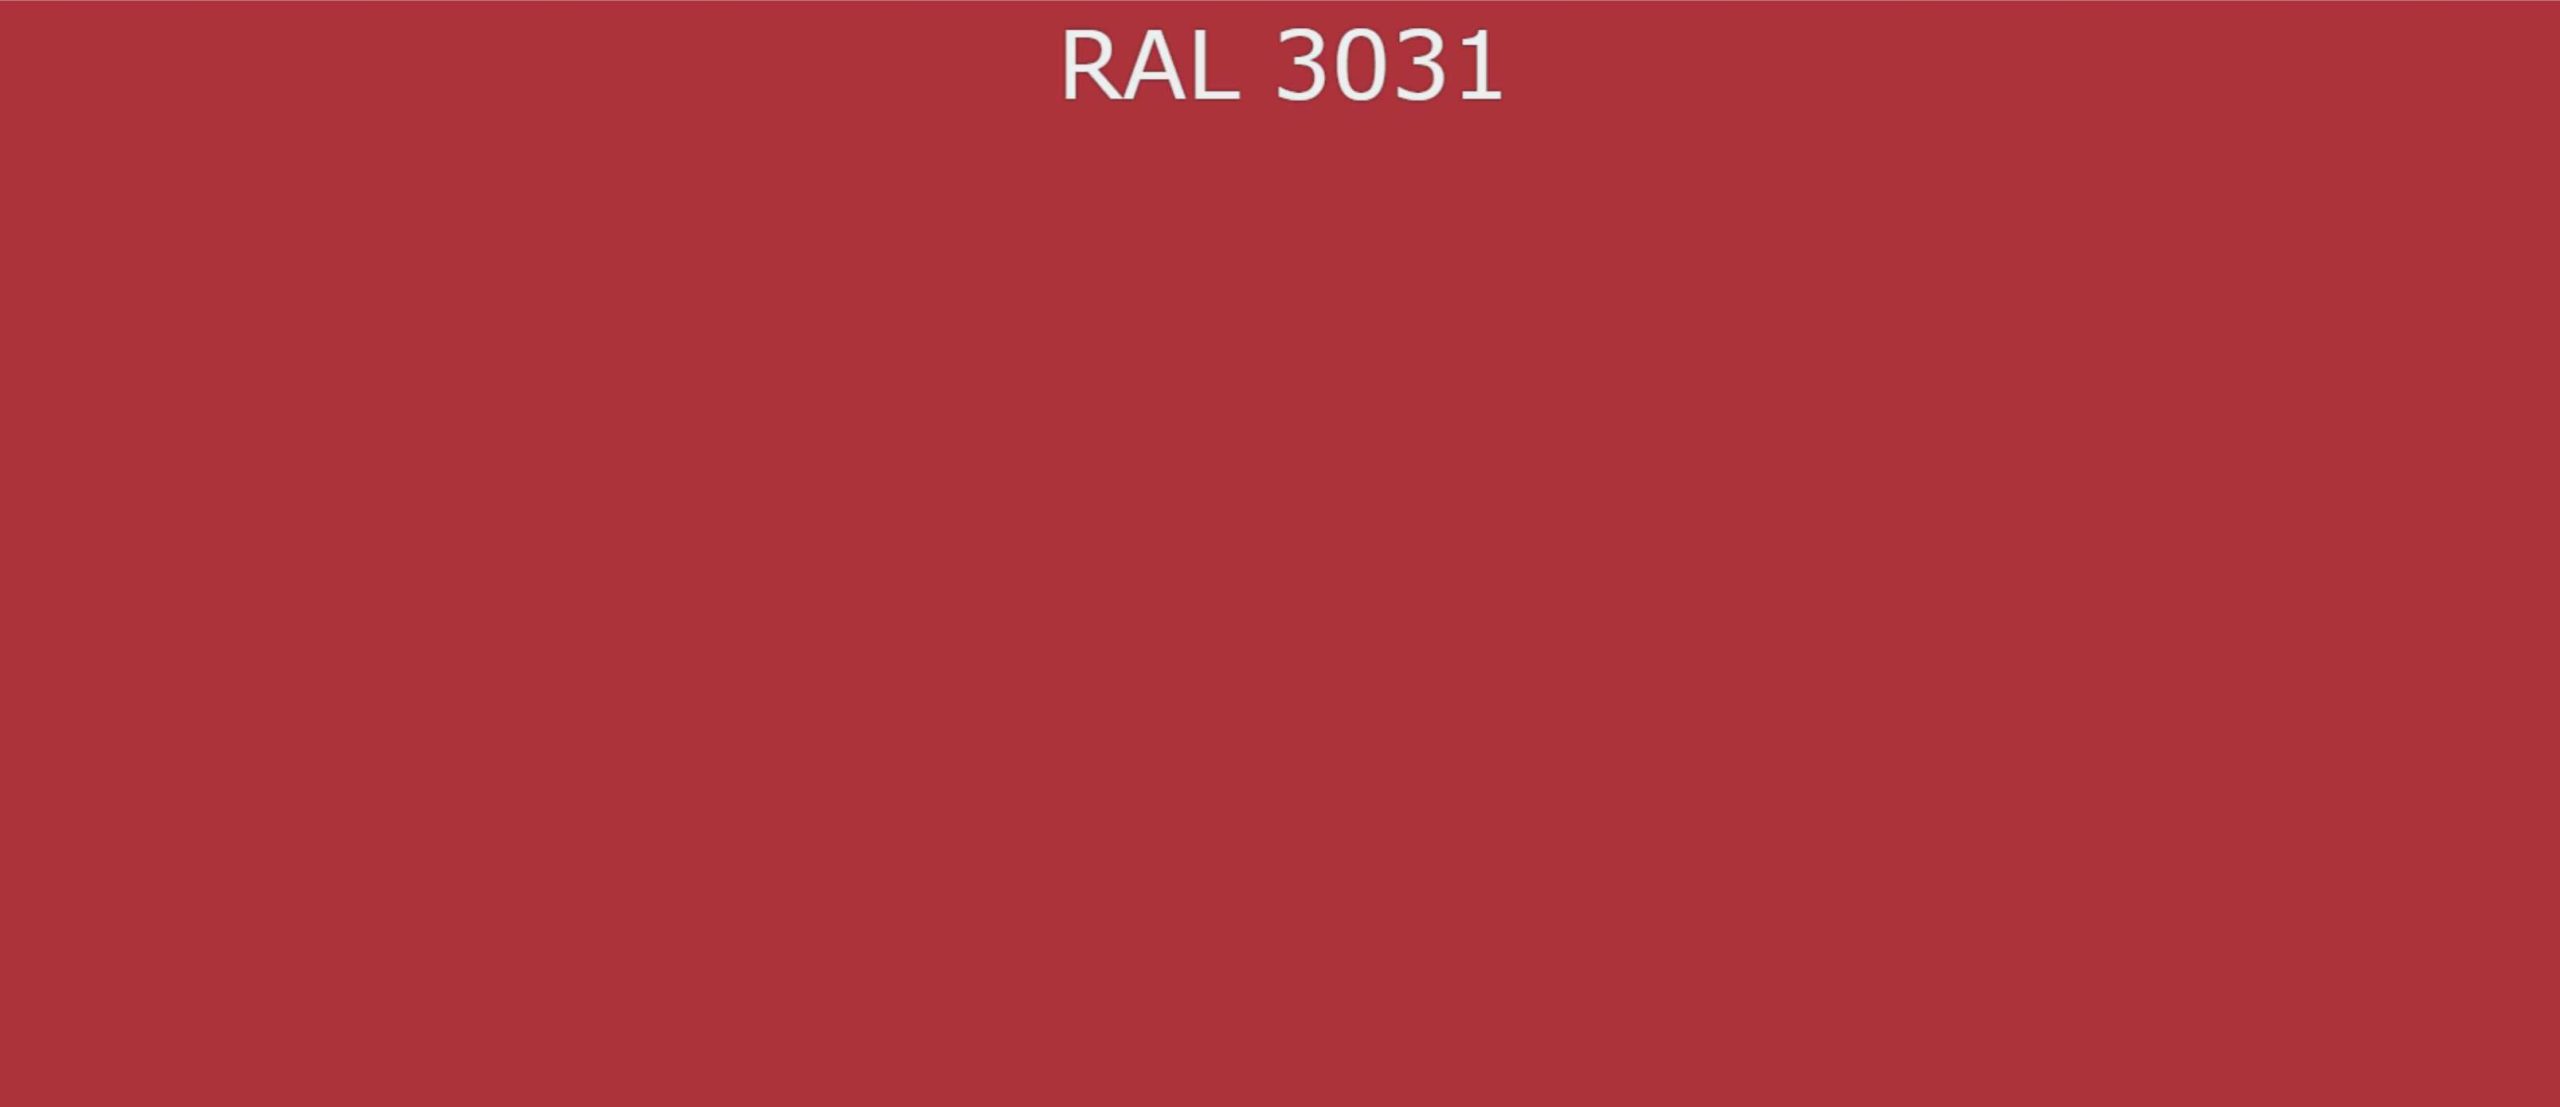 Рал 5017 какой цвет фото